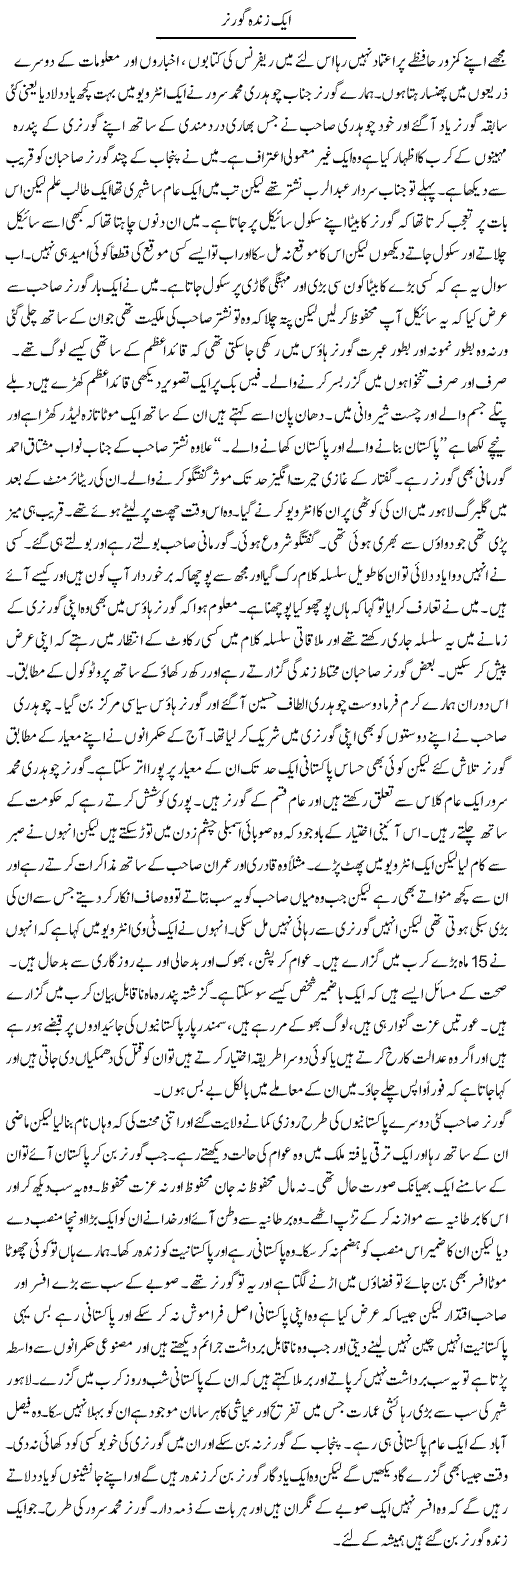 Aik Zinda Governor | Abdul Qadir Hassan | Daily Urdu Columns